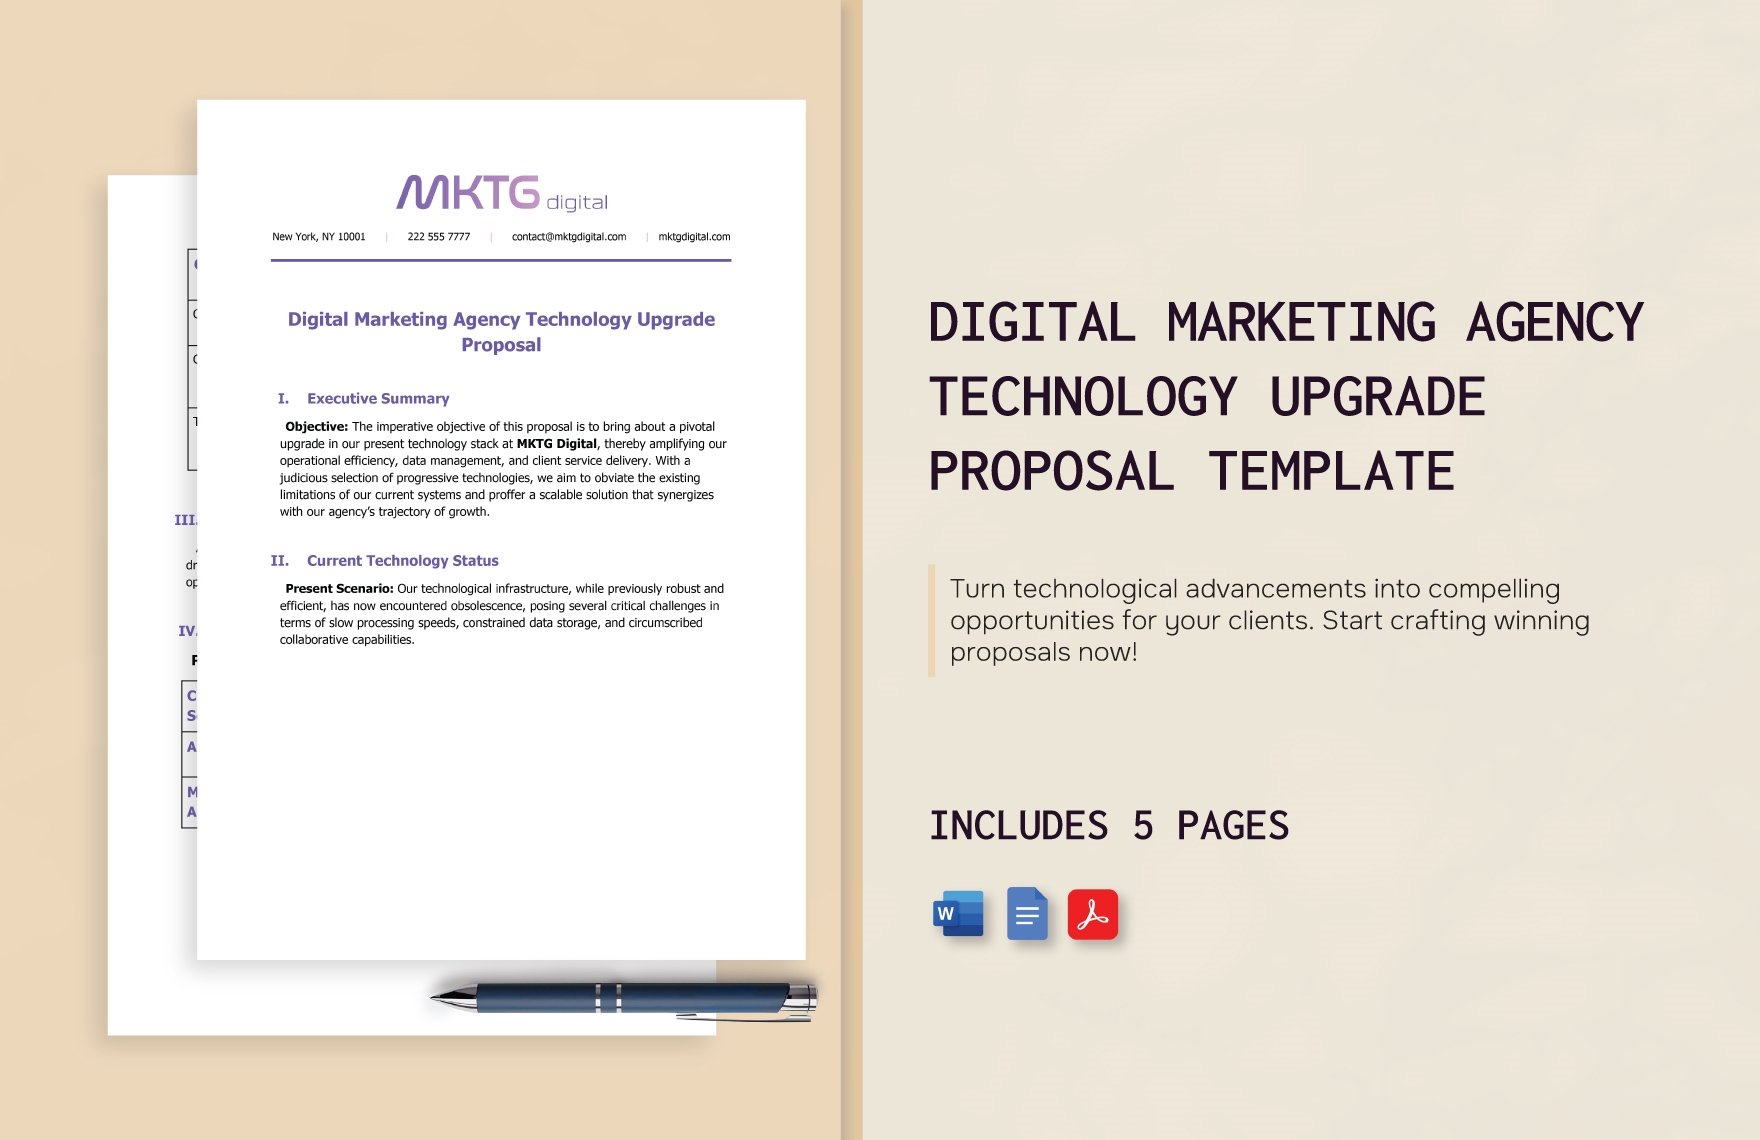 Digital Marketing Agency Technology Upgrade Proposal Template